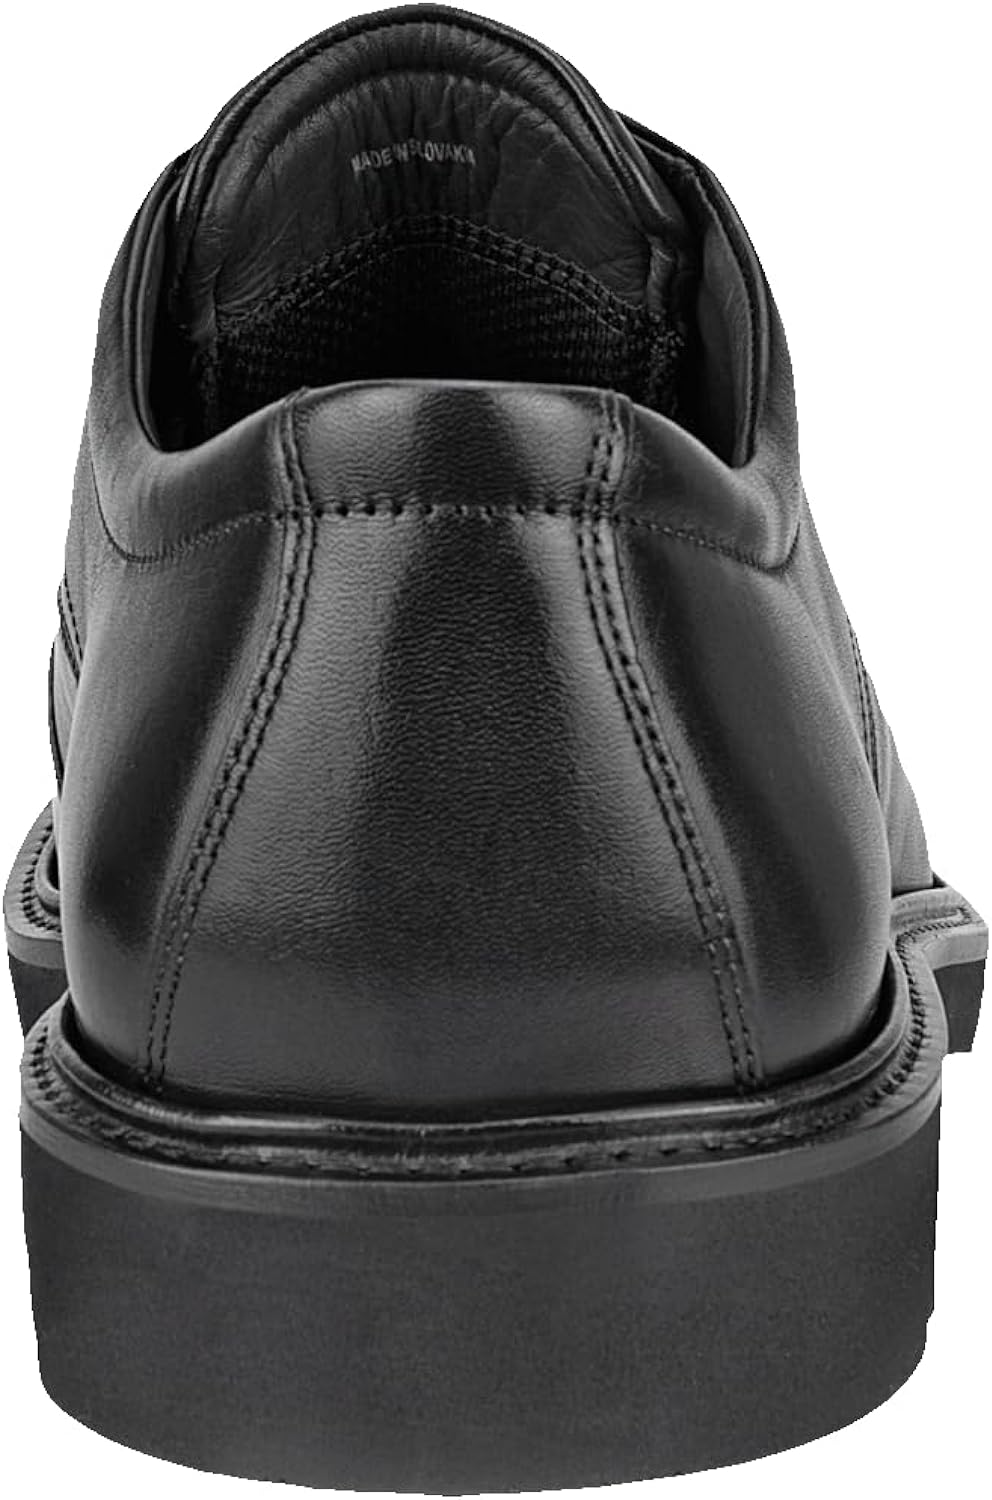 ECCO Men’s London Plain Toe Tie Oxford(Black) - ECCO Shoes Sale